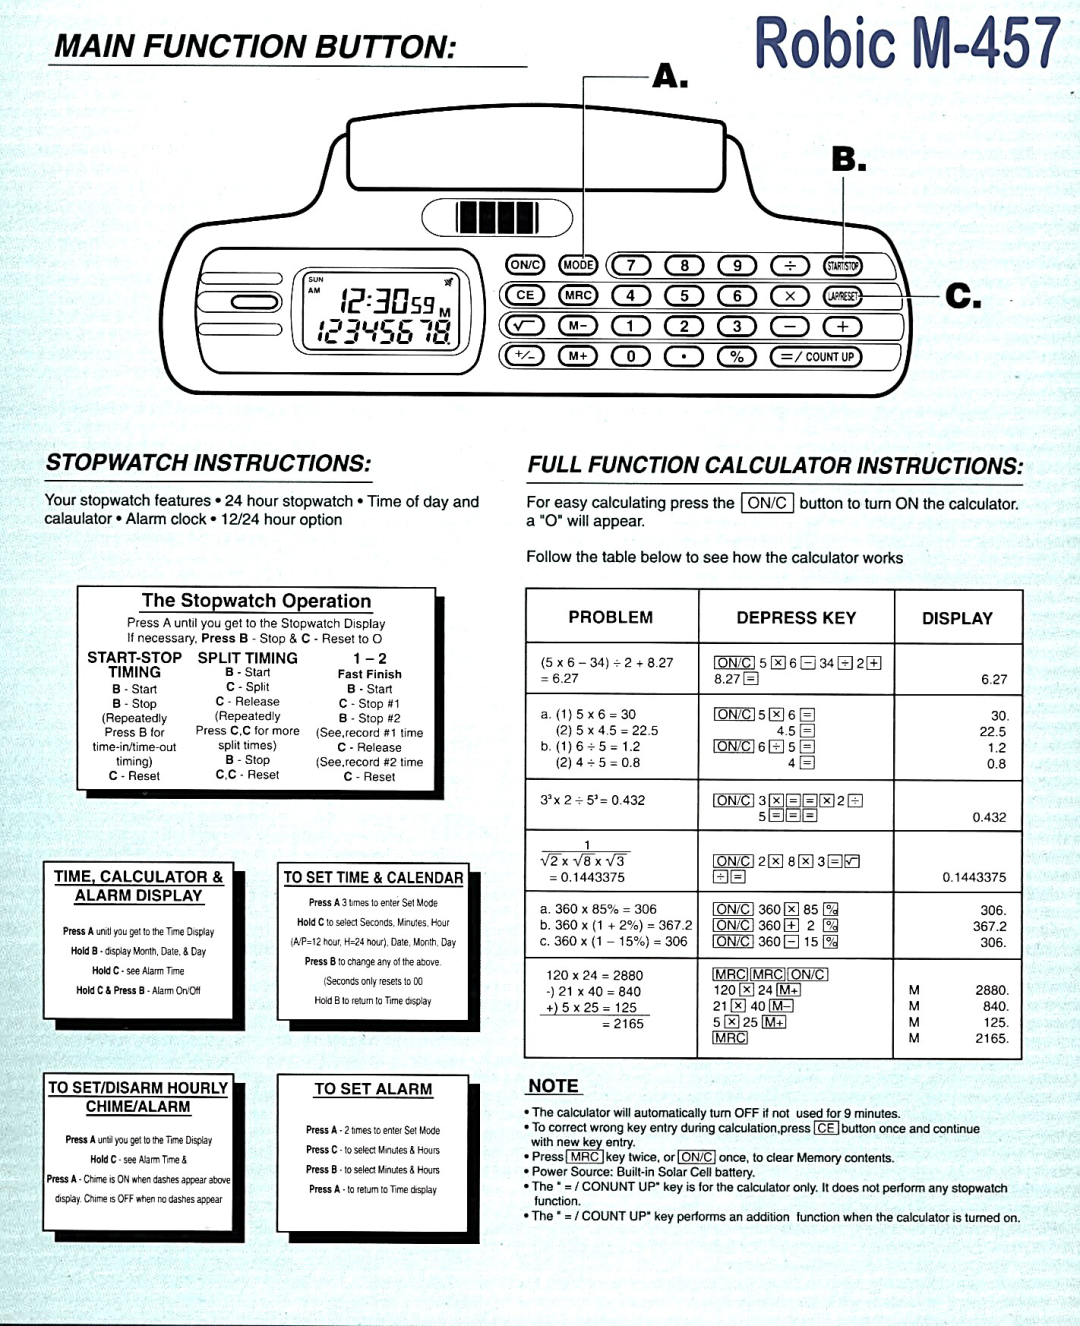 Robic M-457 manual 